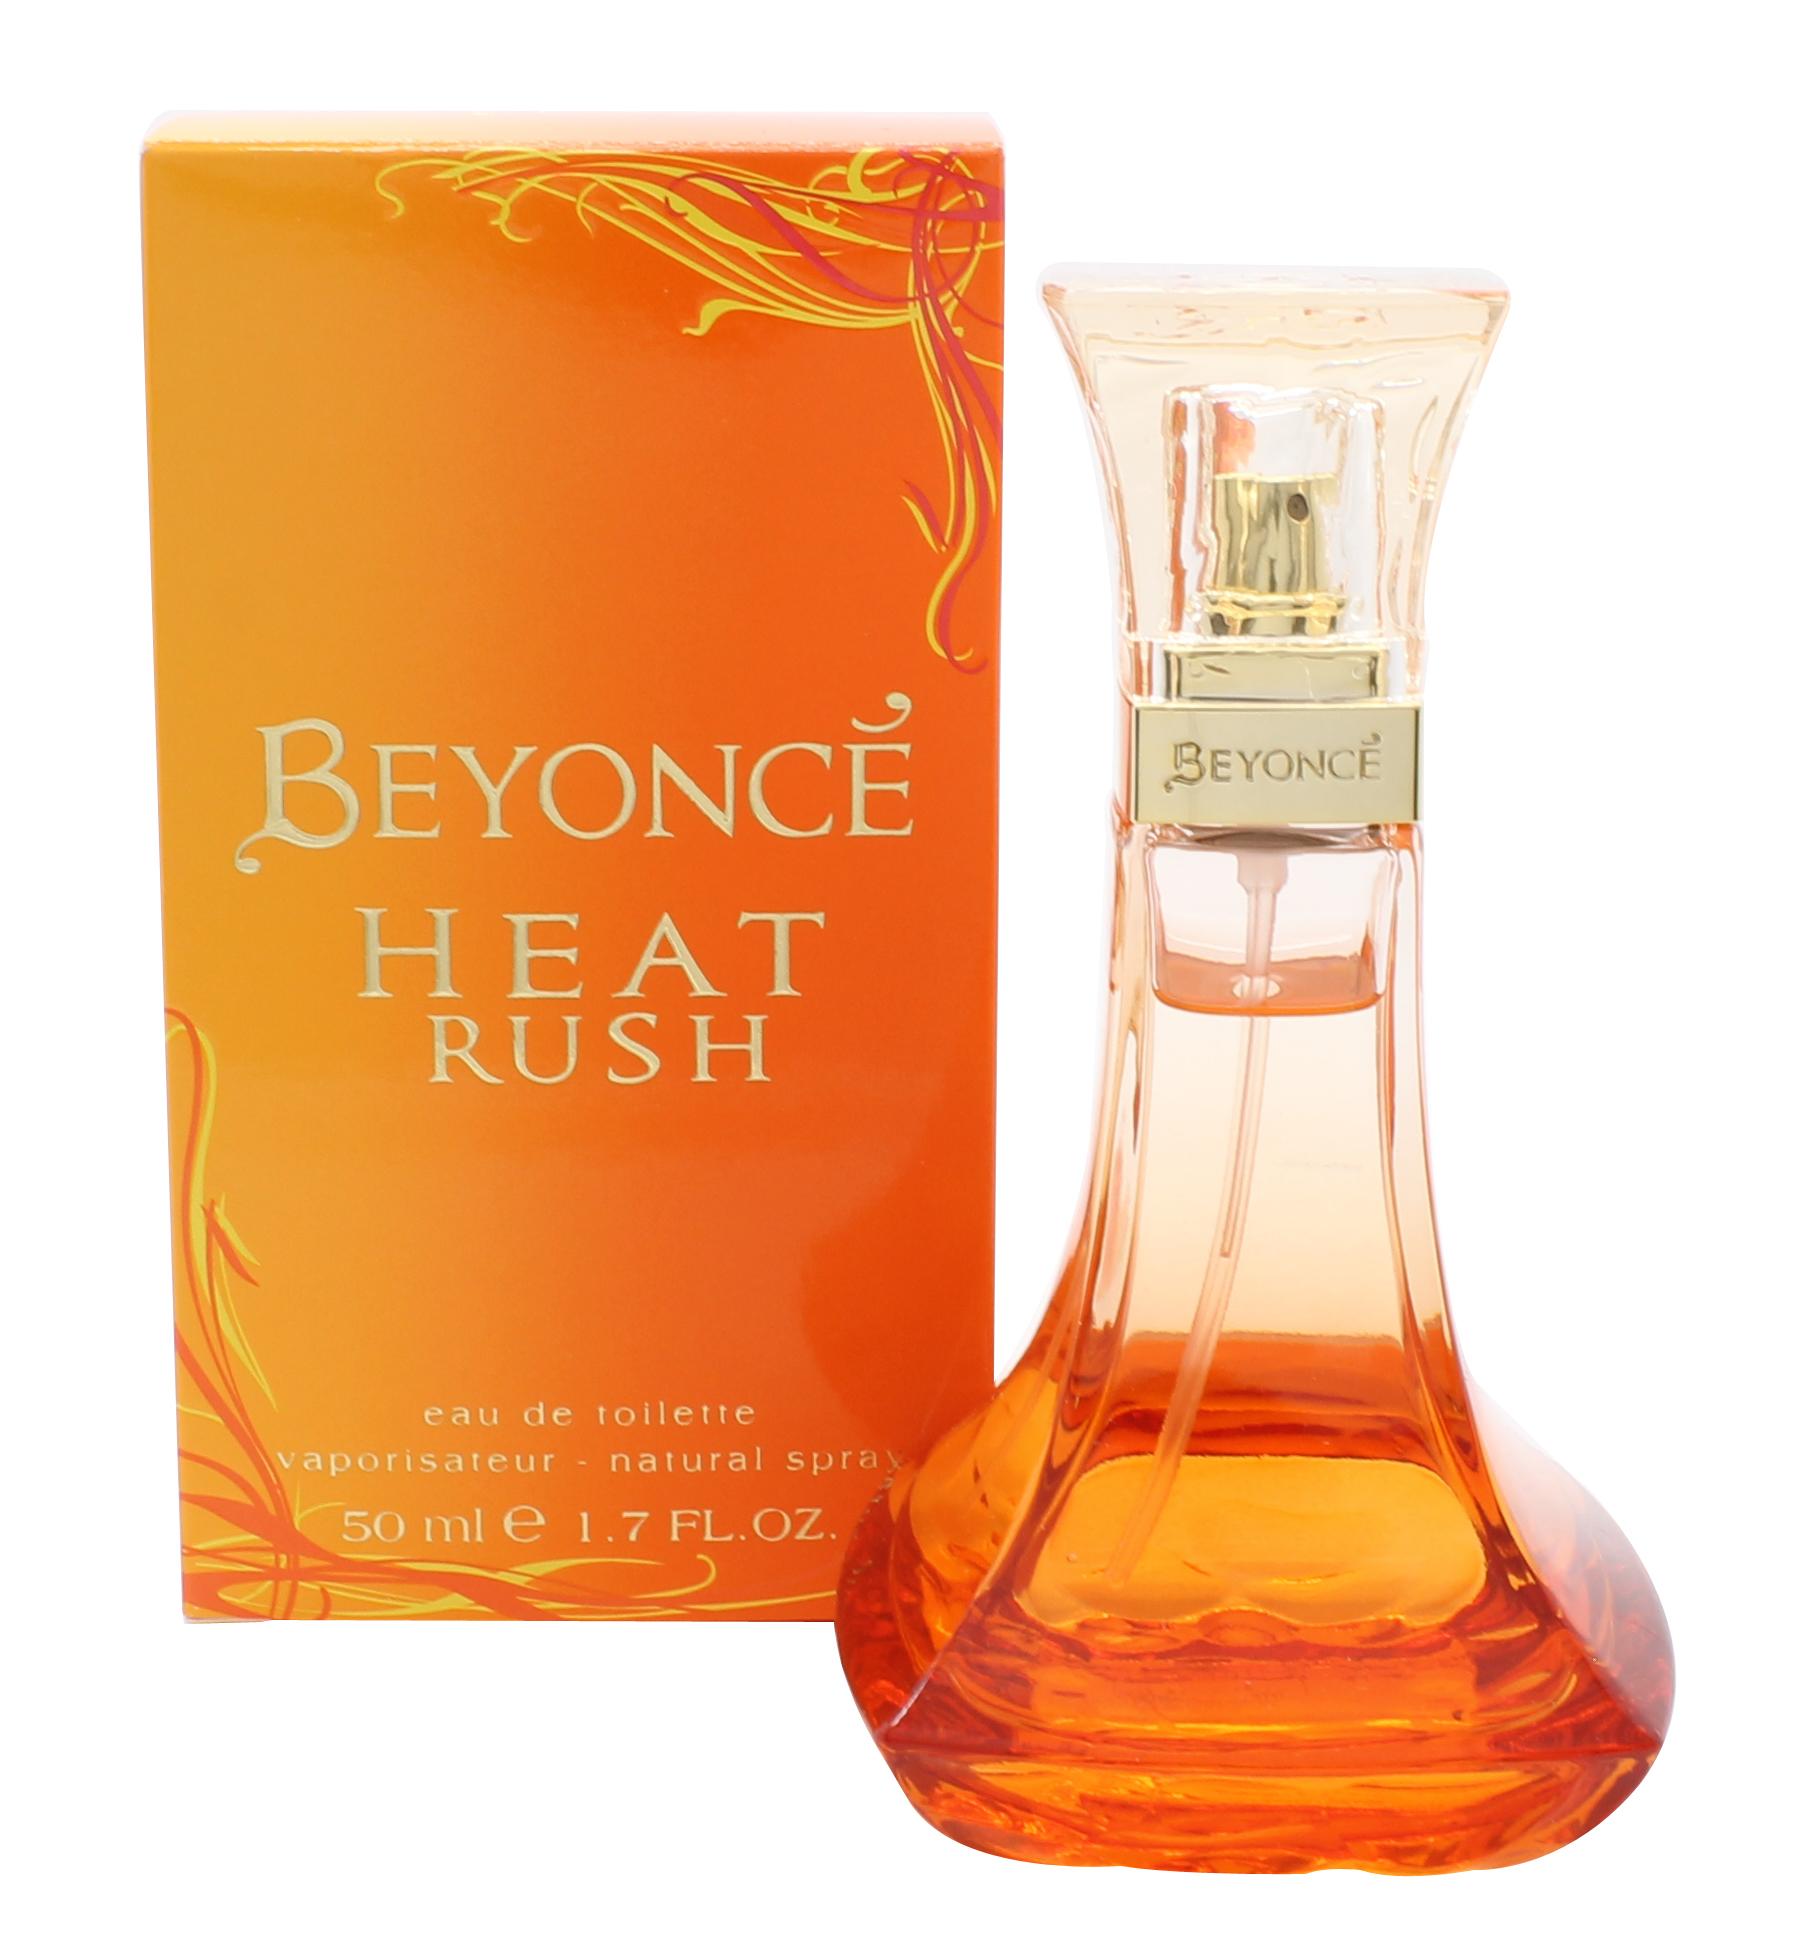 Beyonce Heat Rush Eau de Toilette 50ml Spray